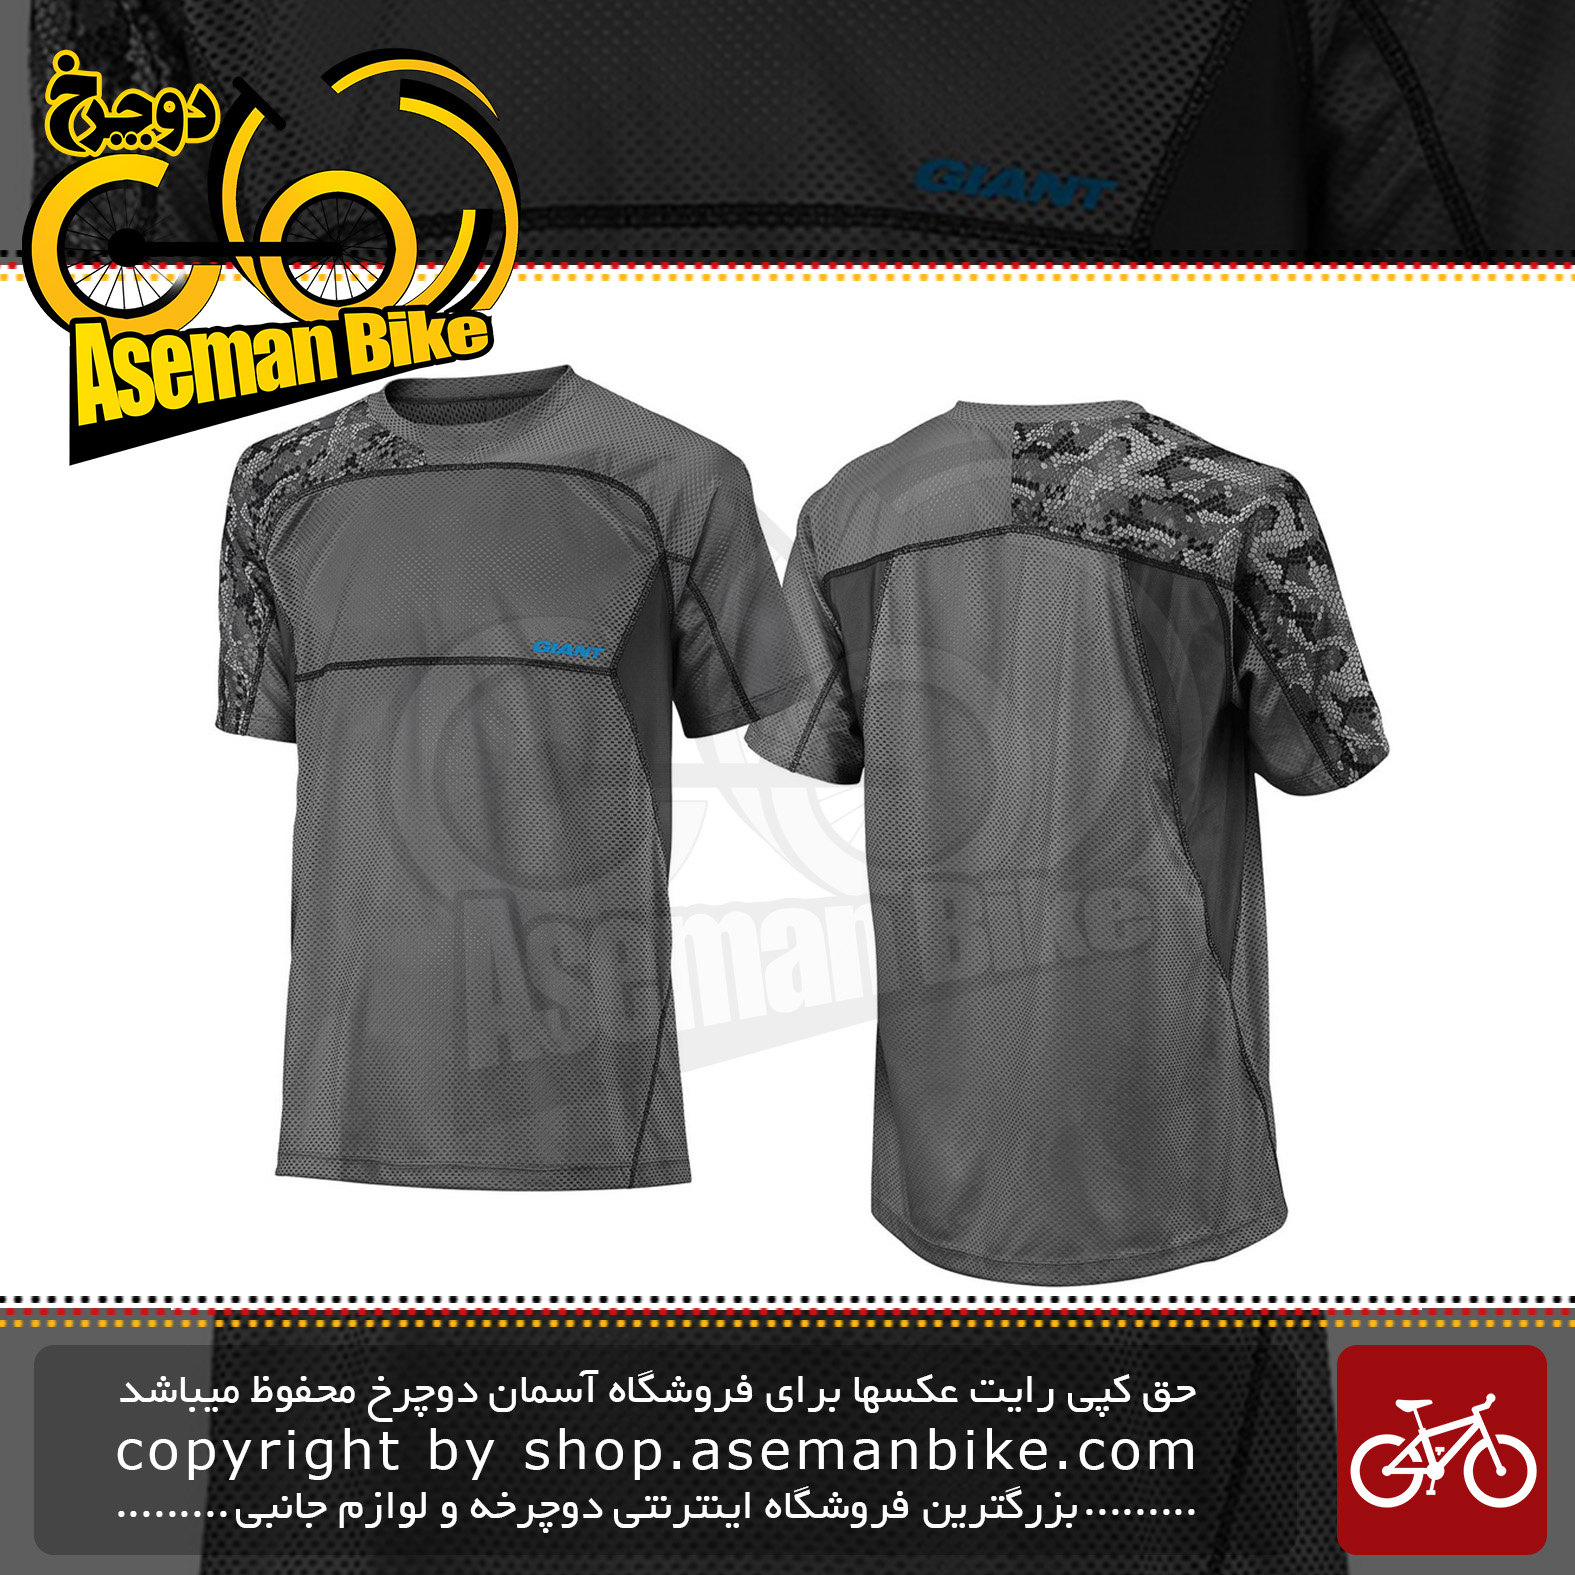 لباس دوچرخه سواری تی شرت برند جاینت مدل ریلم آستین کوتاه خاکستری سایز ایکس لارج Bicycle Giant Realm Short Sleeve Jersey Black XL